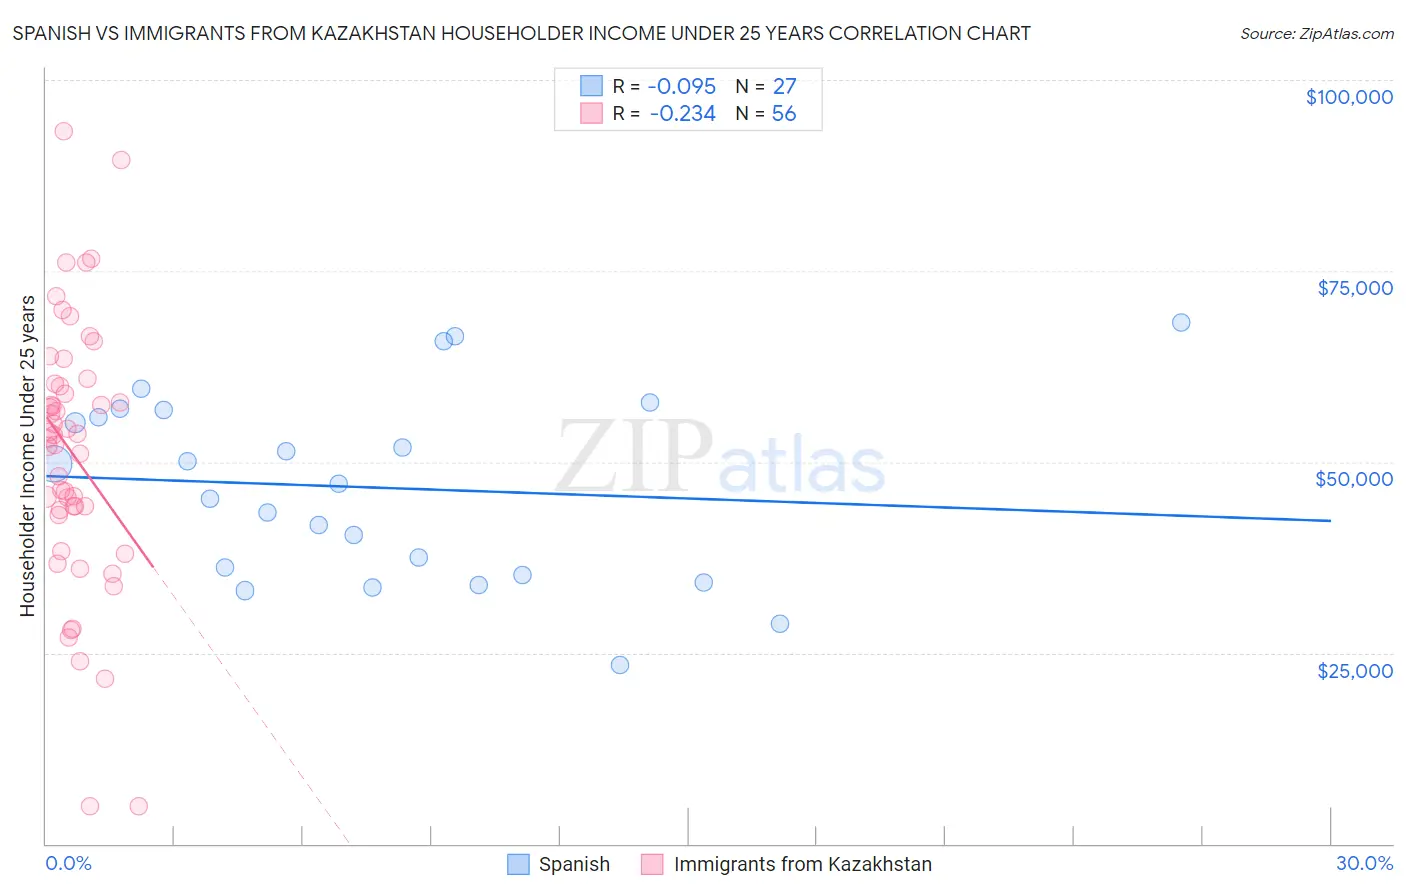 Spanish vs Immigrants from Kazakhstan Householder Income Under 25 years